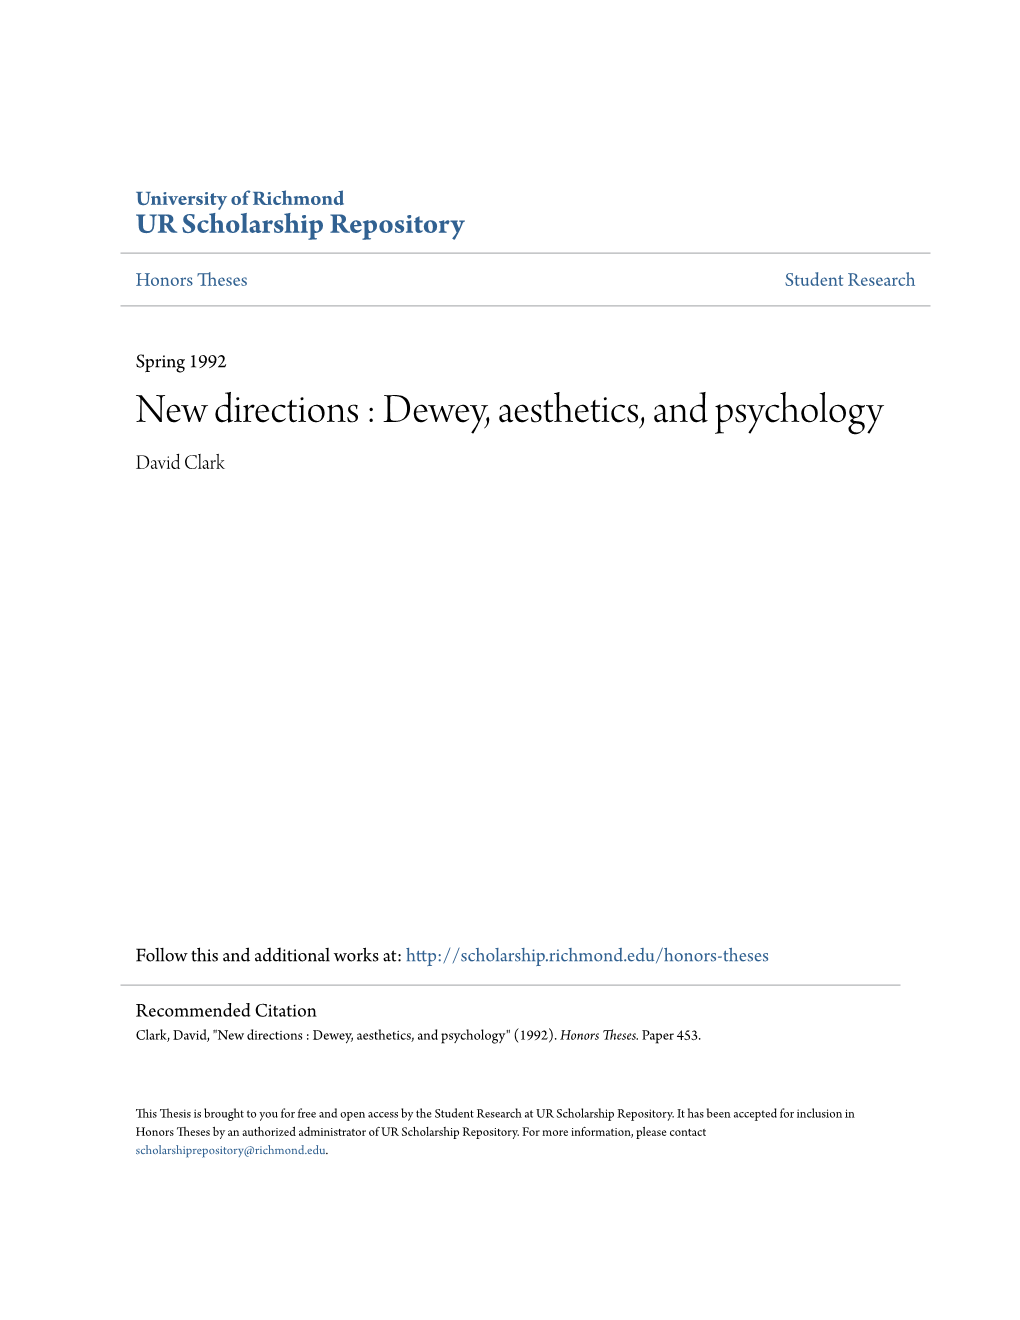 New Directions : Dewey, Aesthetics, and Psychology David Clark